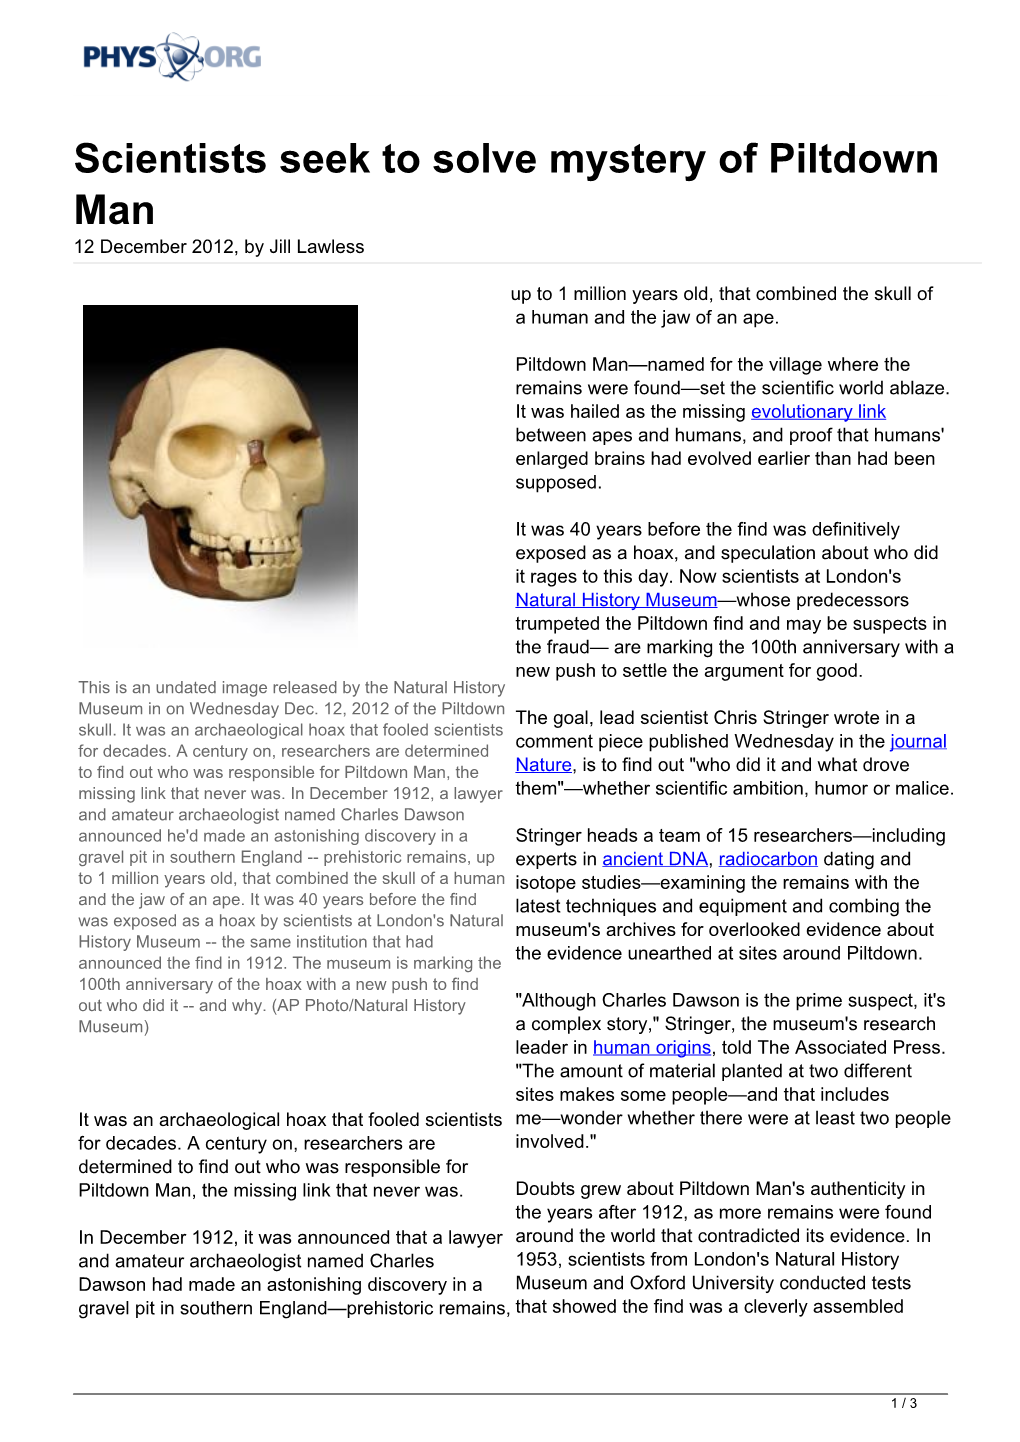 Scientists Seek to Solve Mystery of Piltdown Man 12 December 2012, by Jill Lawless